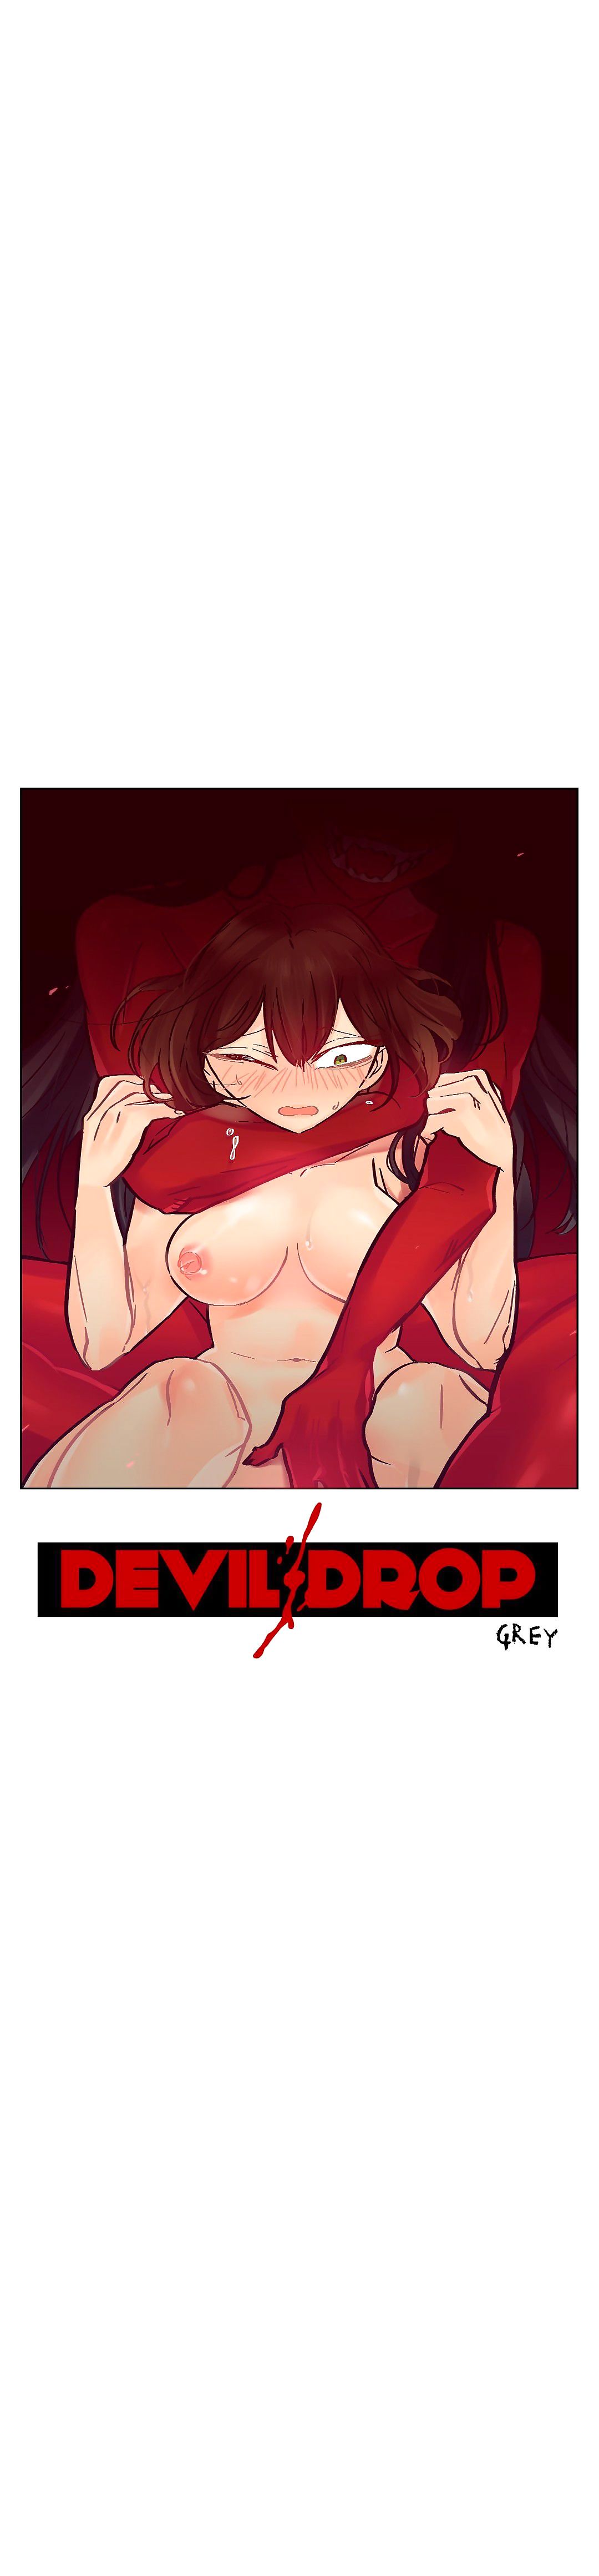 Devil Drop 1-14 - part 14